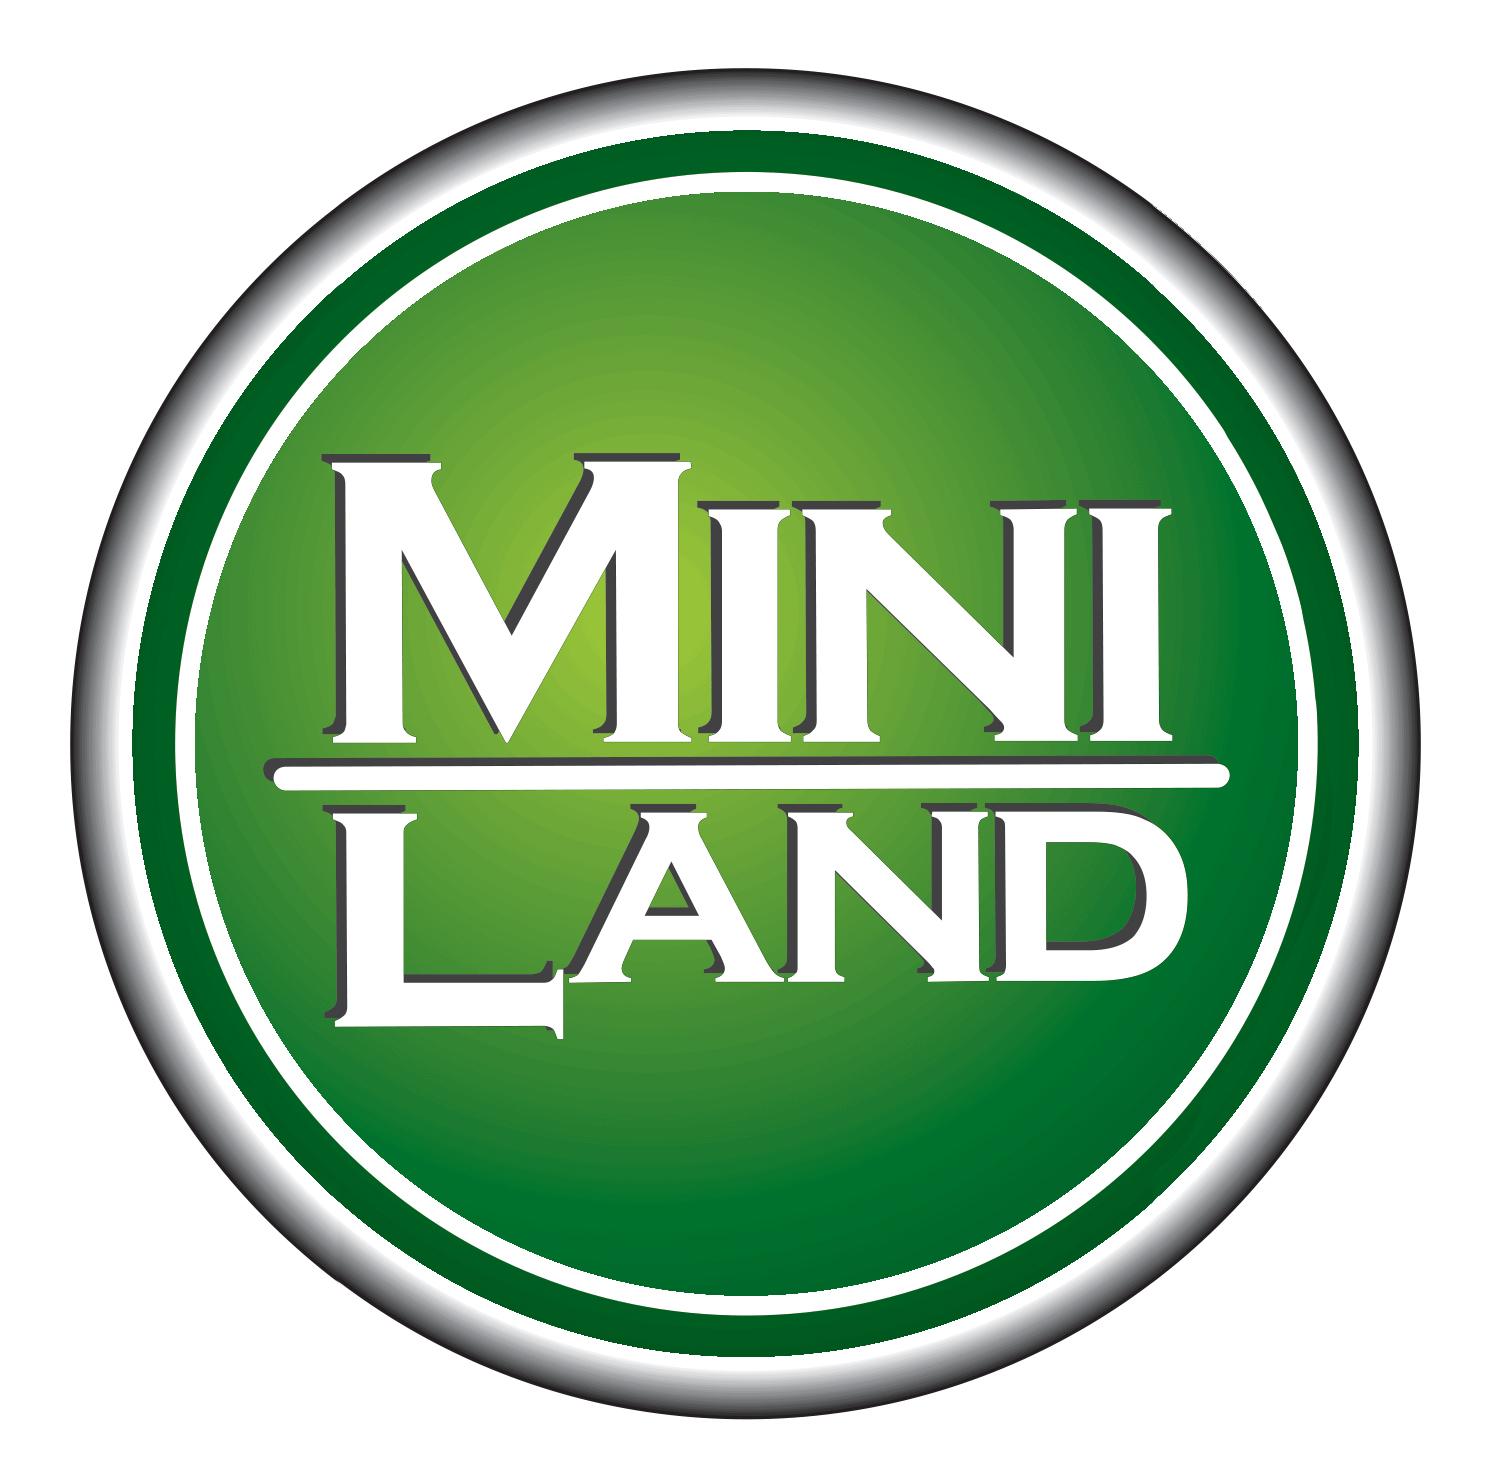 Mini Land Adam Taraziewicz